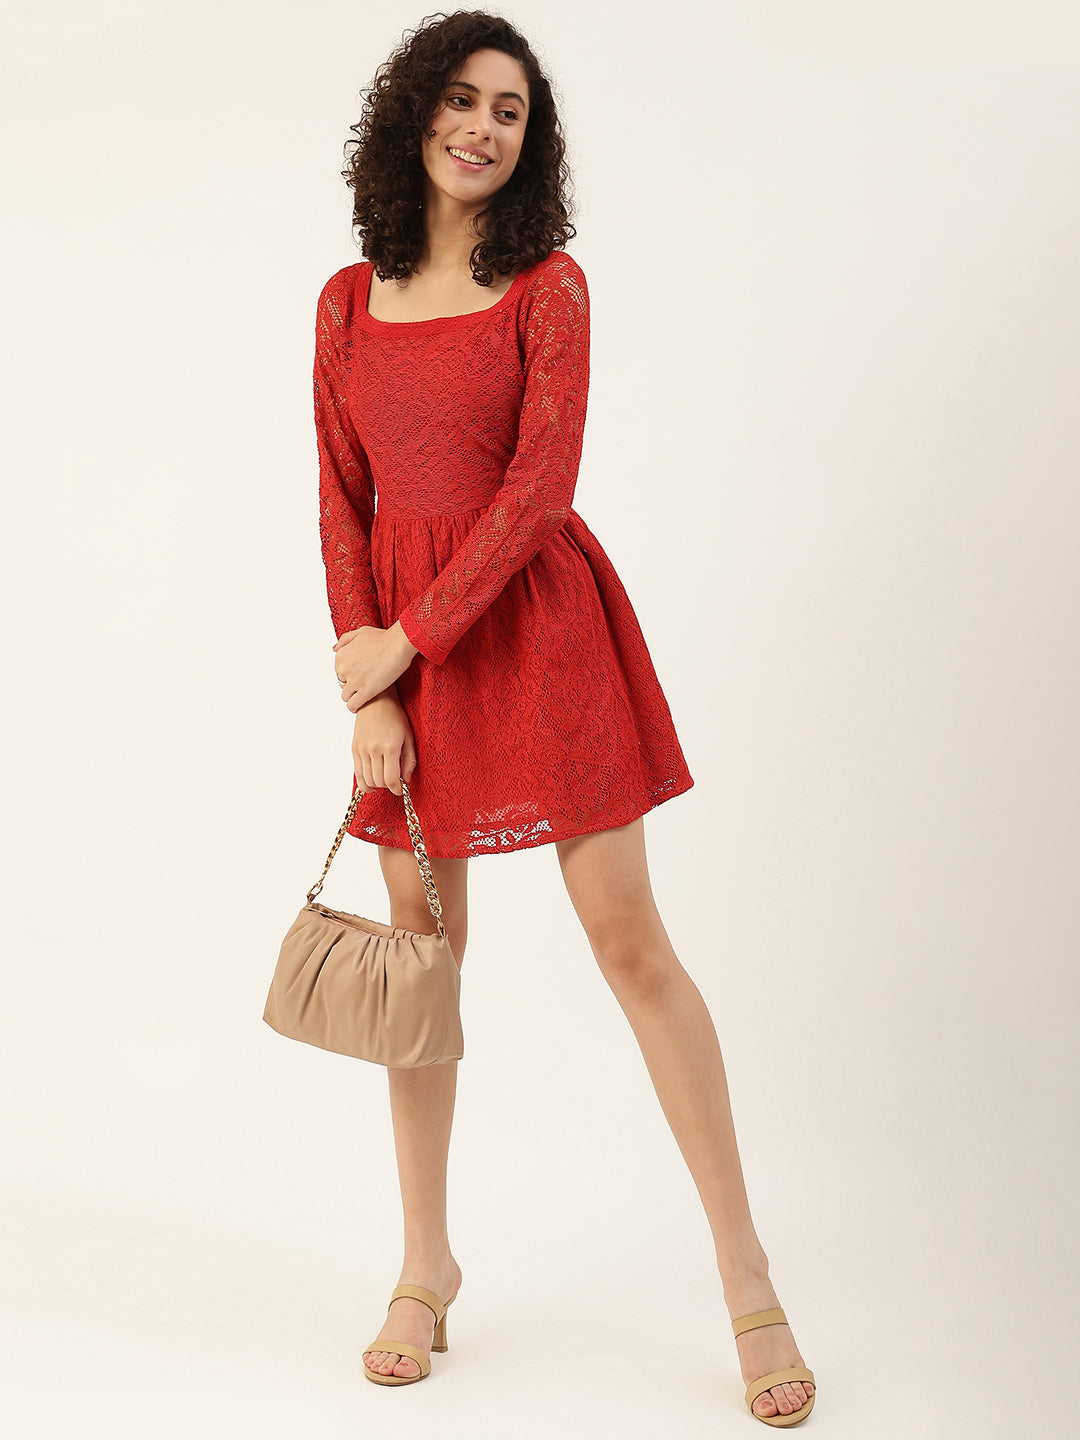 Women's Red Net Dress - Maaesa